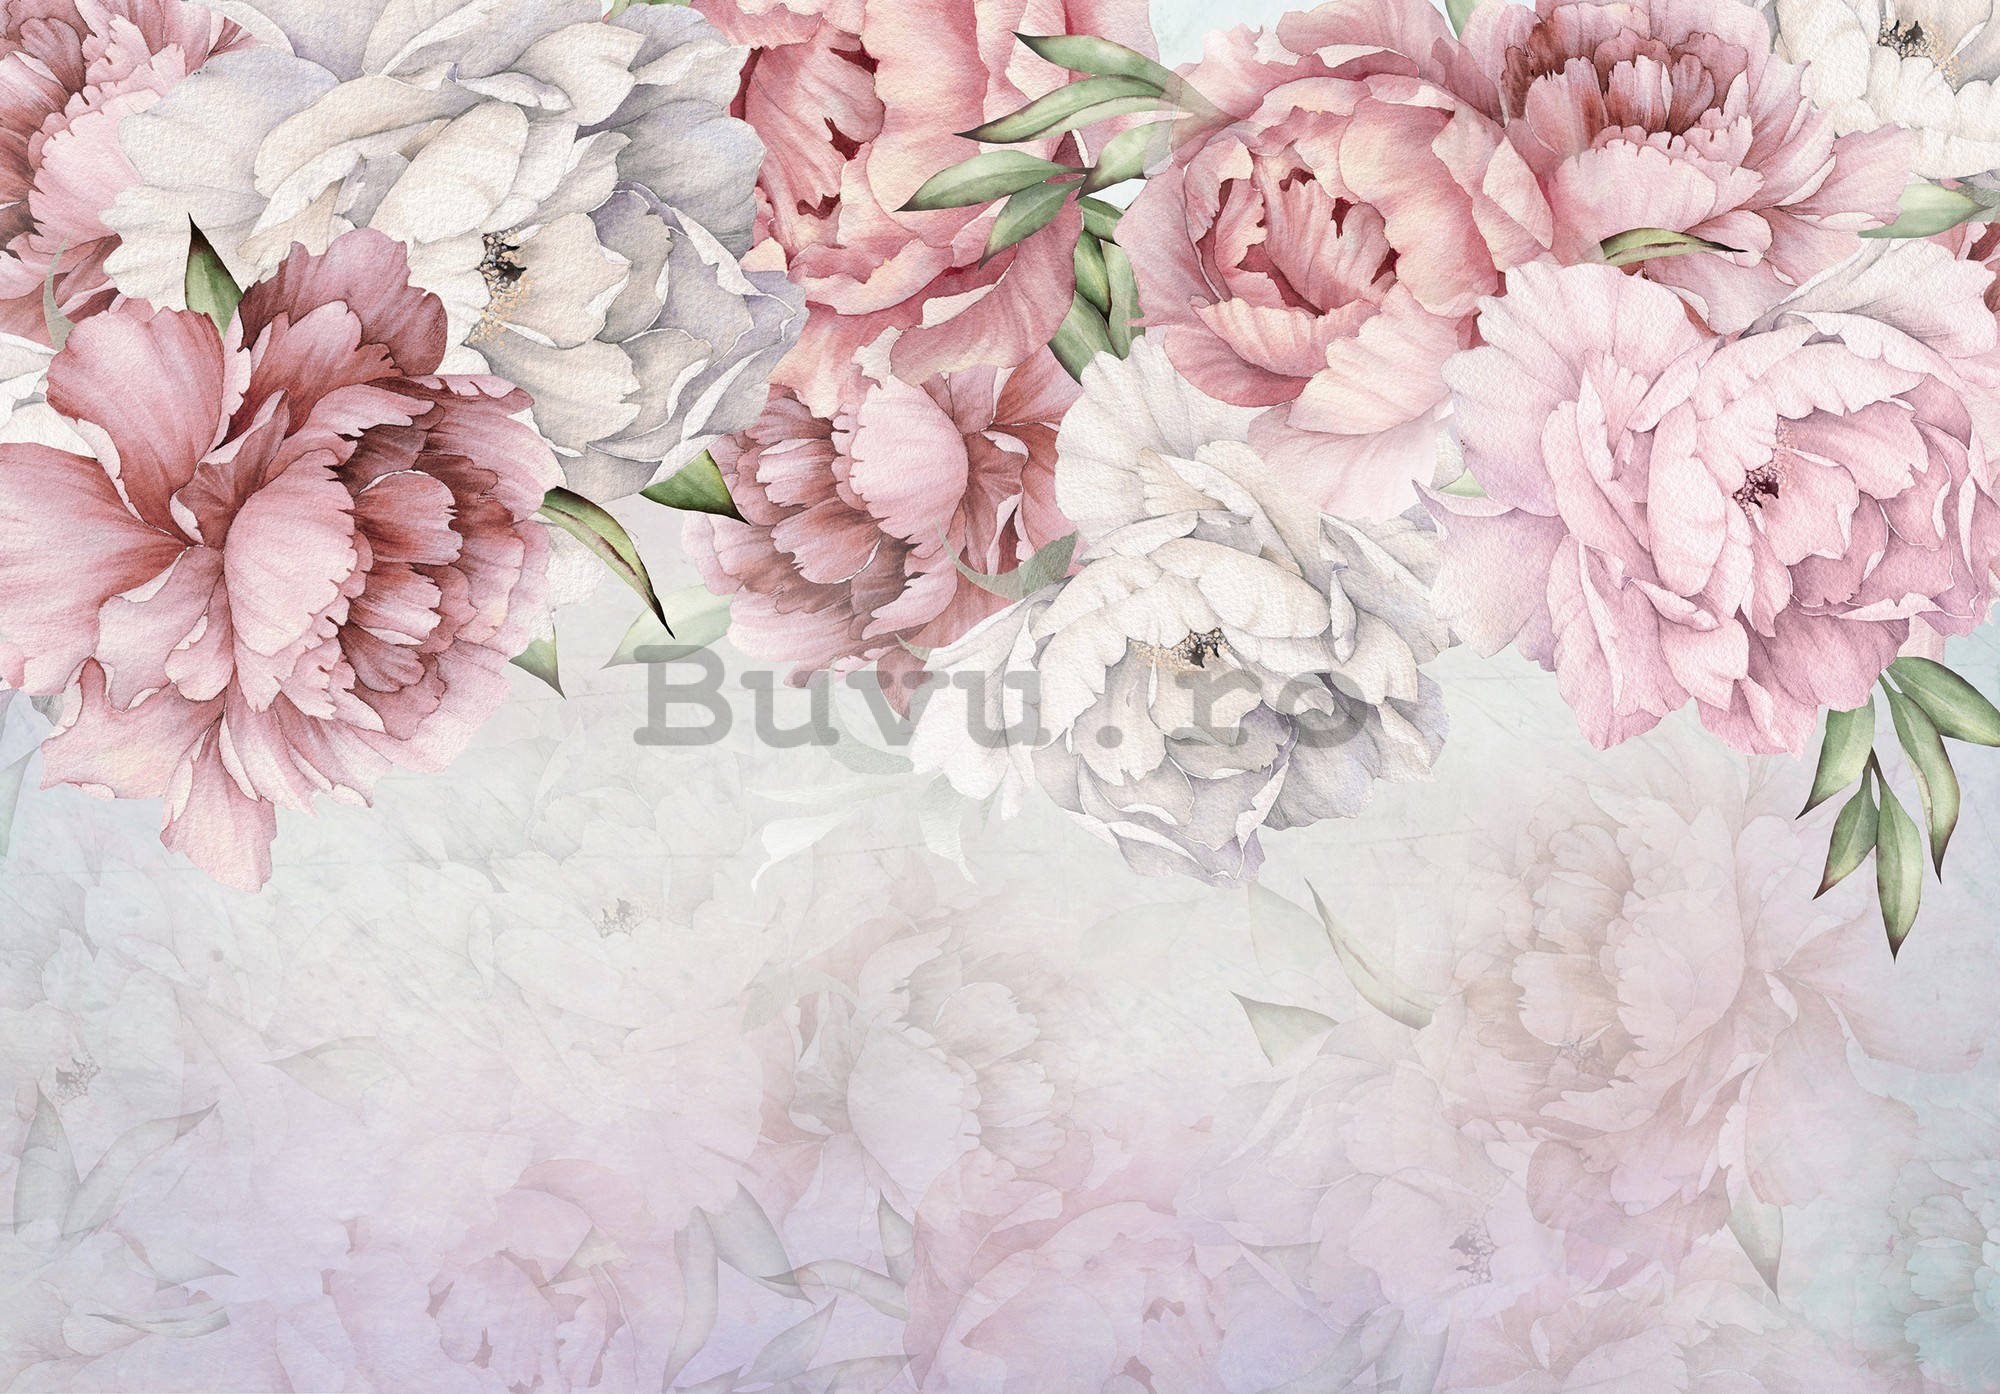 Fototapet vlies: Trandafiri albi și roz - 254x184 cm